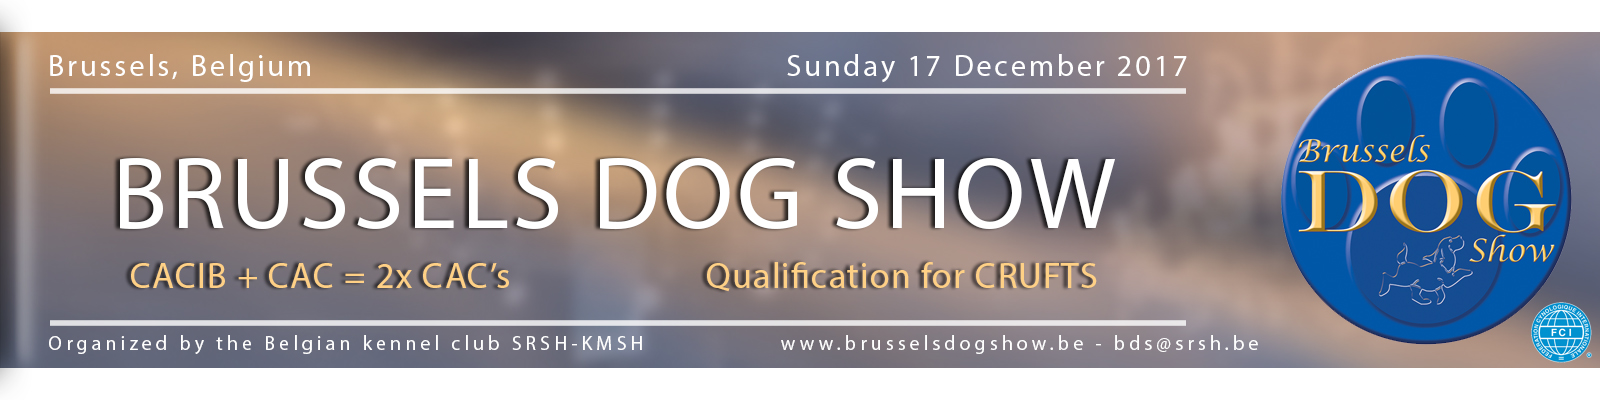 Brussels Dog Show - Sunday 17/12/2017